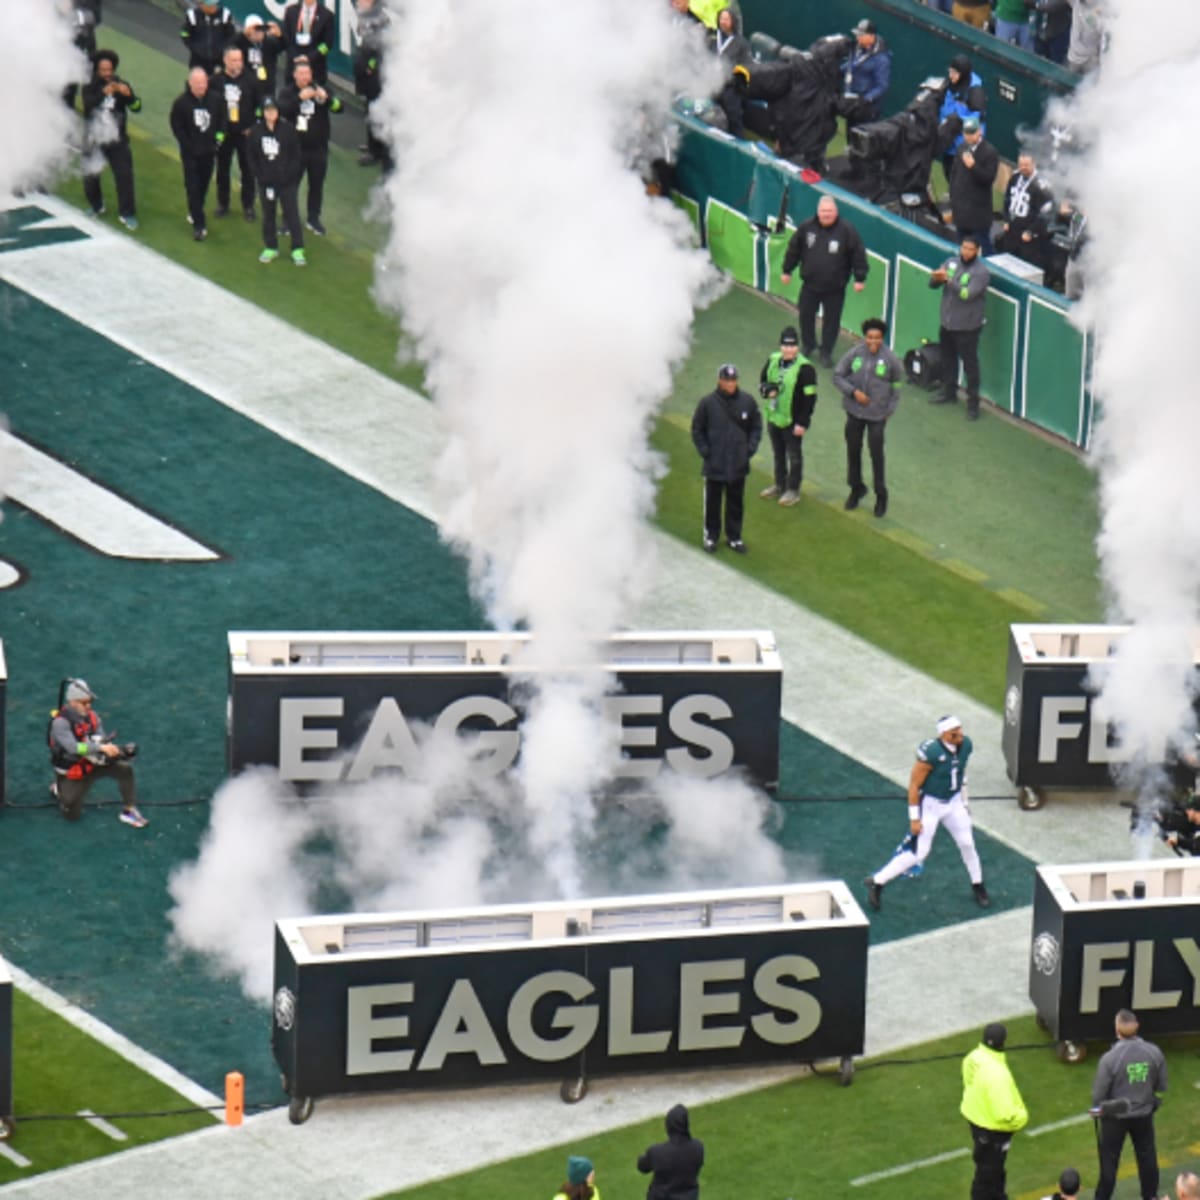 NFL on ESPN - The Philadelphia Eagles unveiled a new